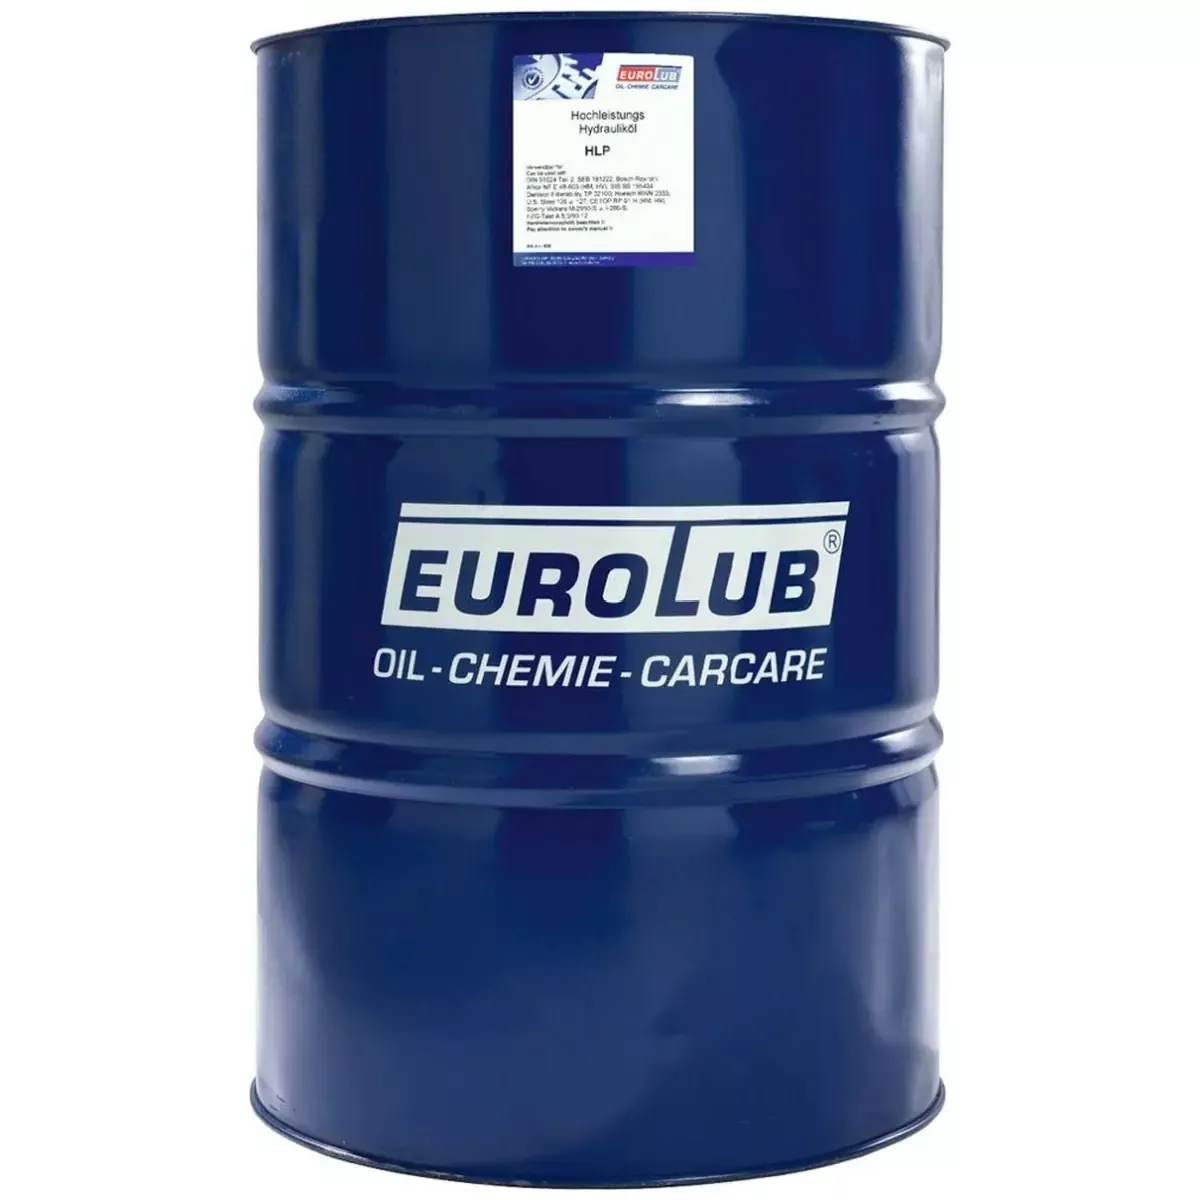 EUROLUB HLP-D ISO-VG 22 Hydrauliköl (20 Liter)